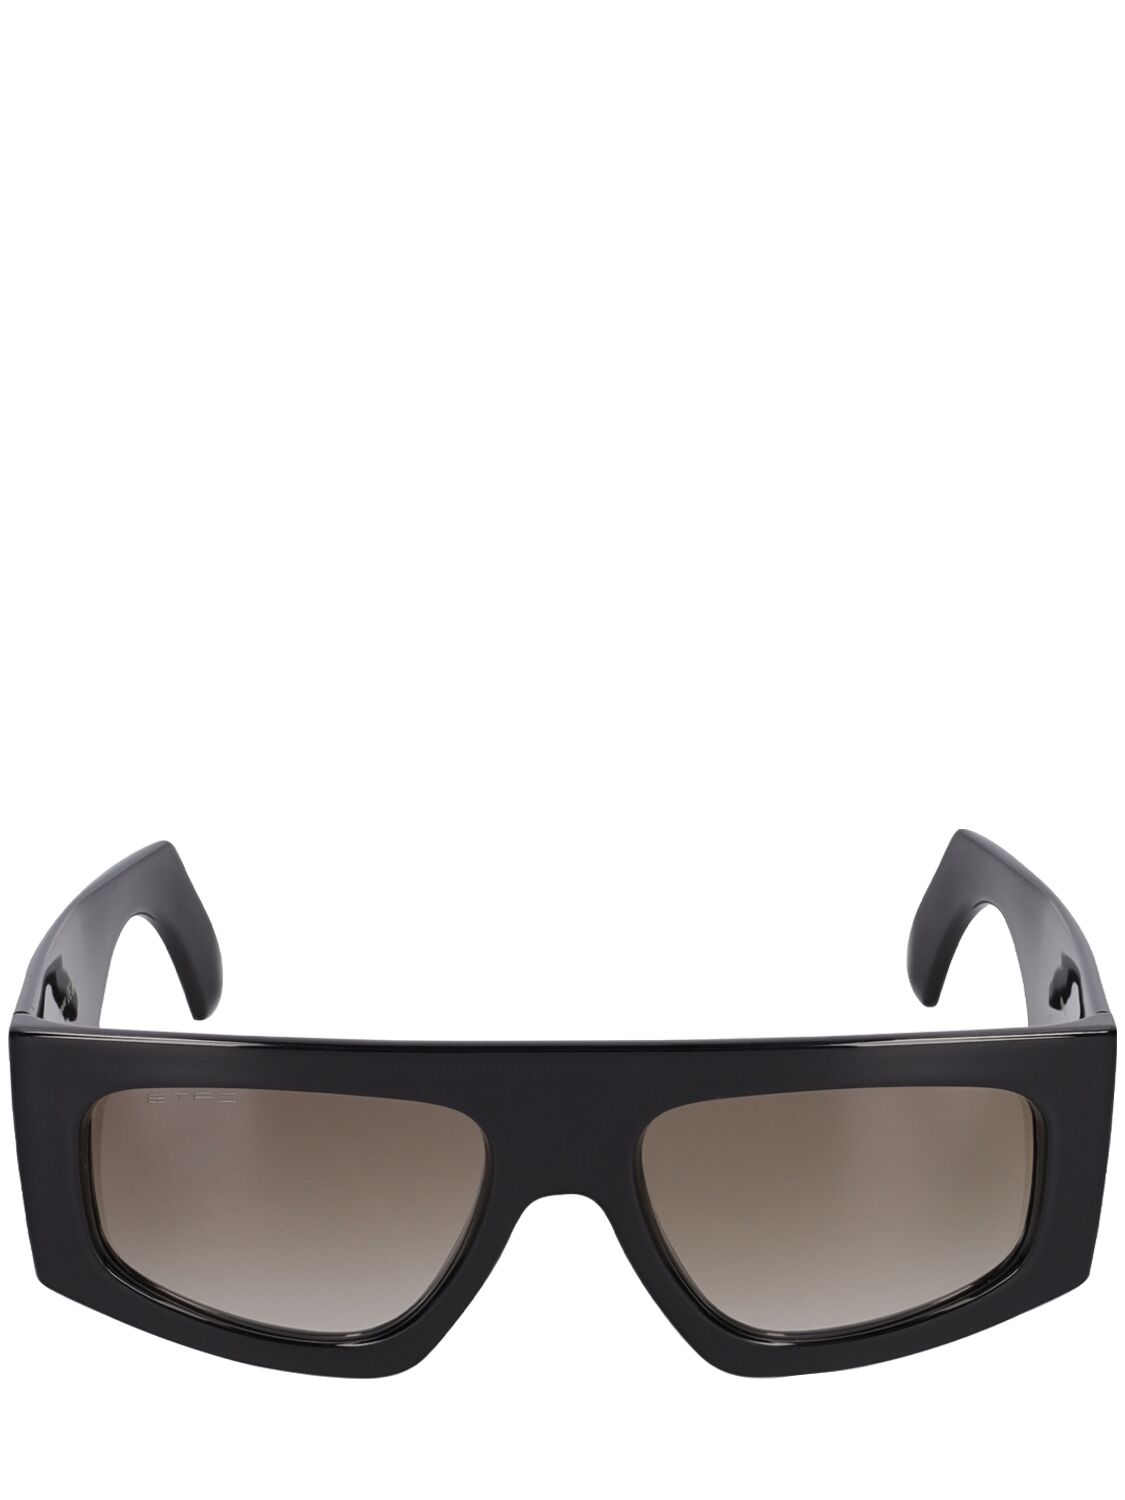 Etroscreen Squared Sunglasses